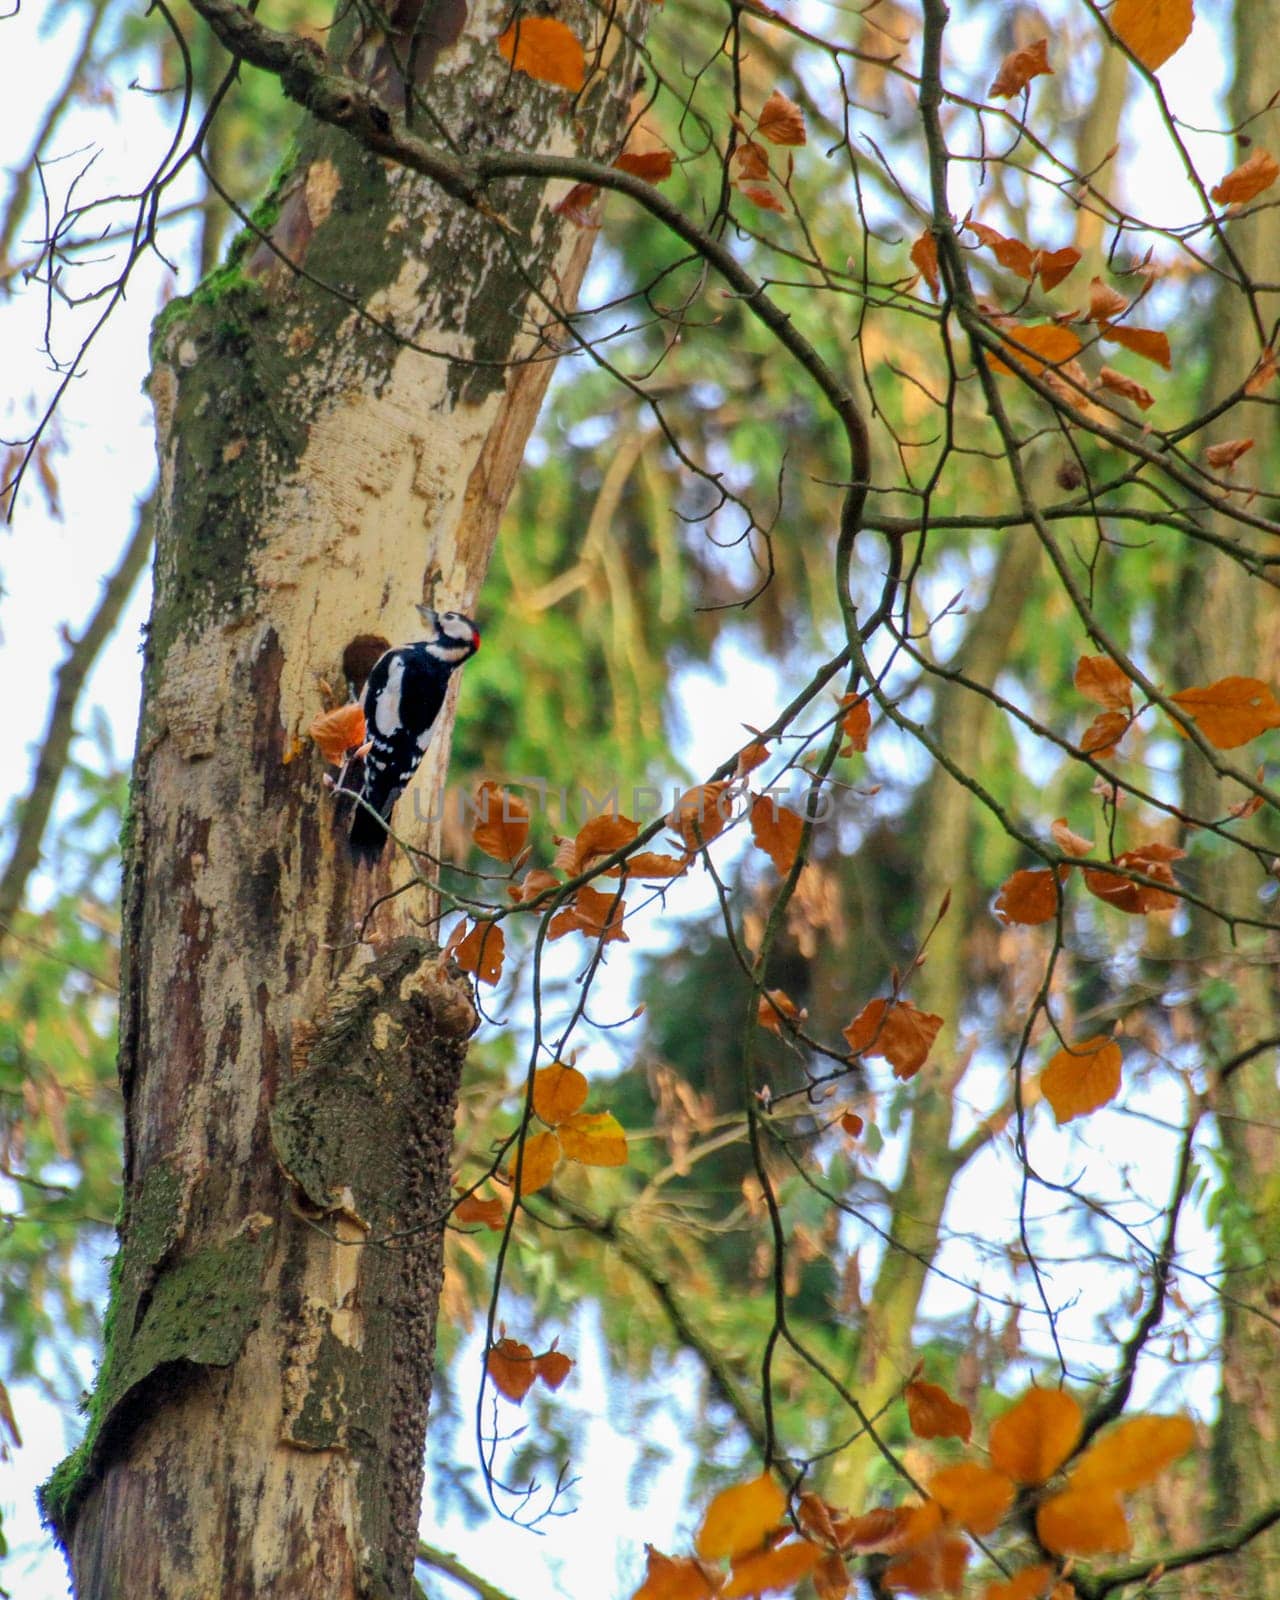 Woodpecker on an autumn tree near a hollow. High quality photo